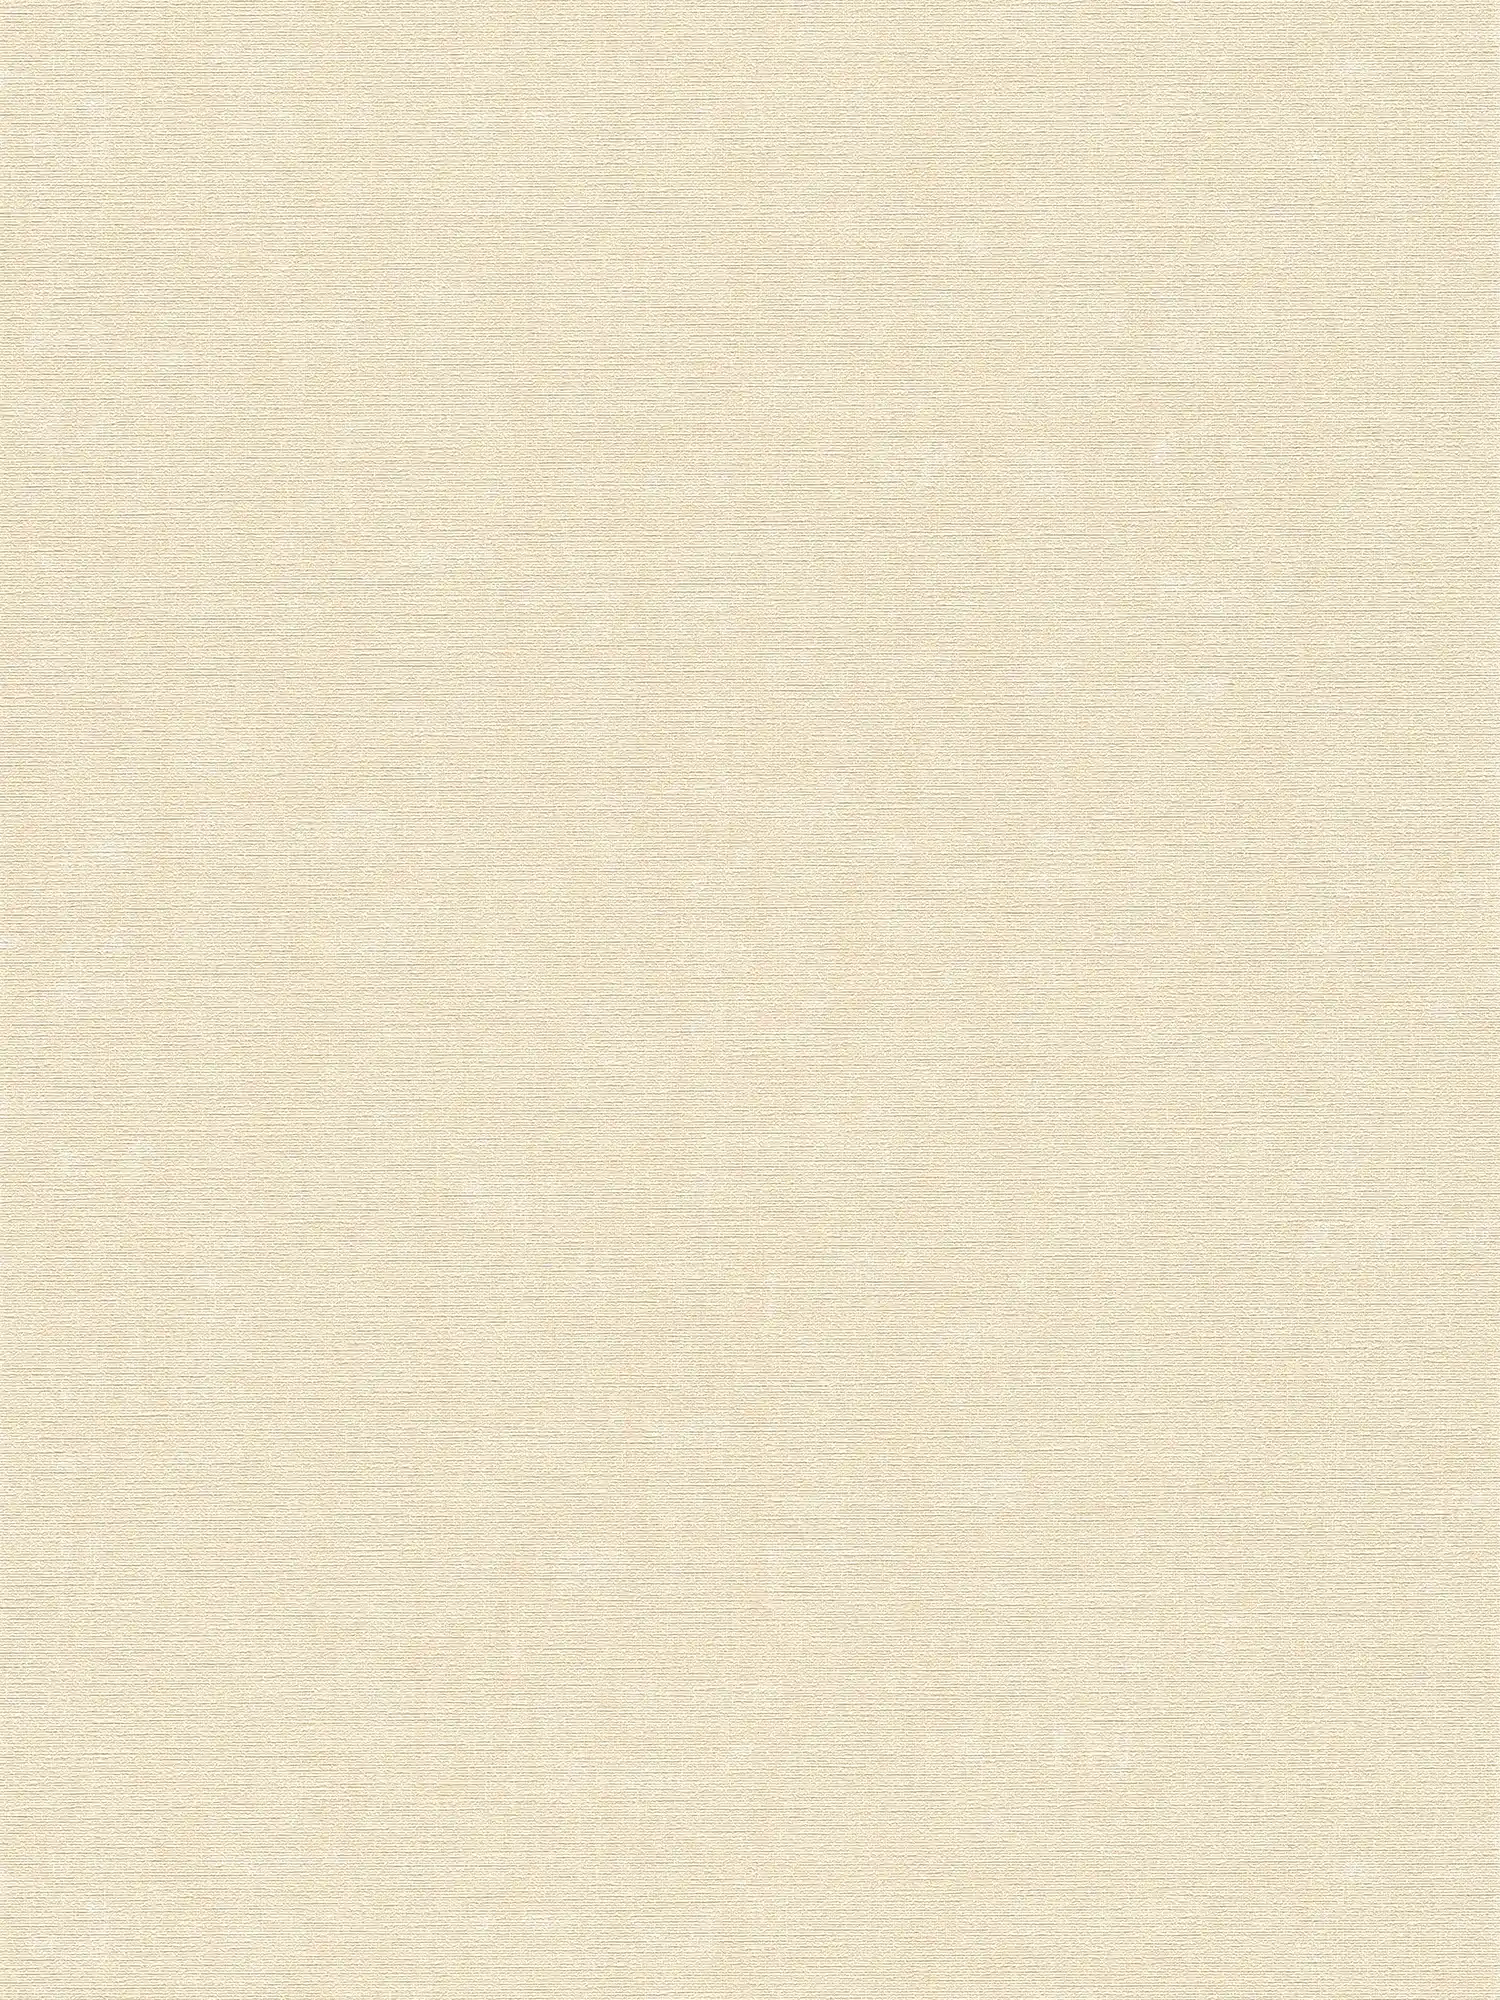 Plain wallpaper with mottled pattern - cream, beige
